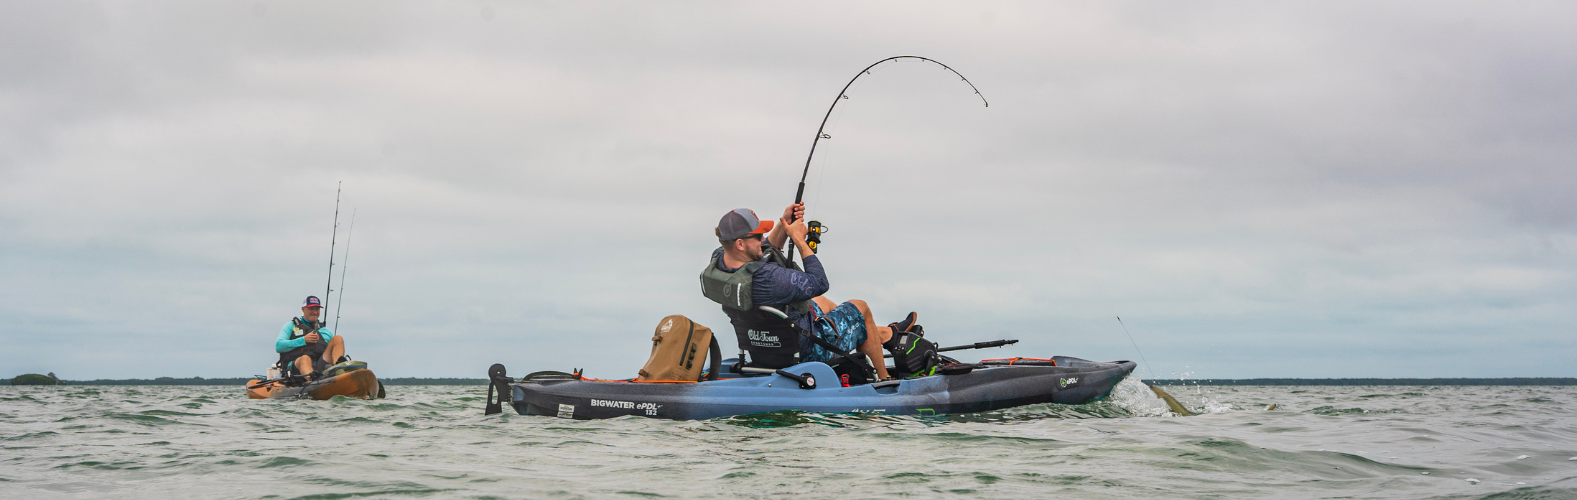 360° Adjustable Kayak Fishing Rod Holder with T-Shaped Screw